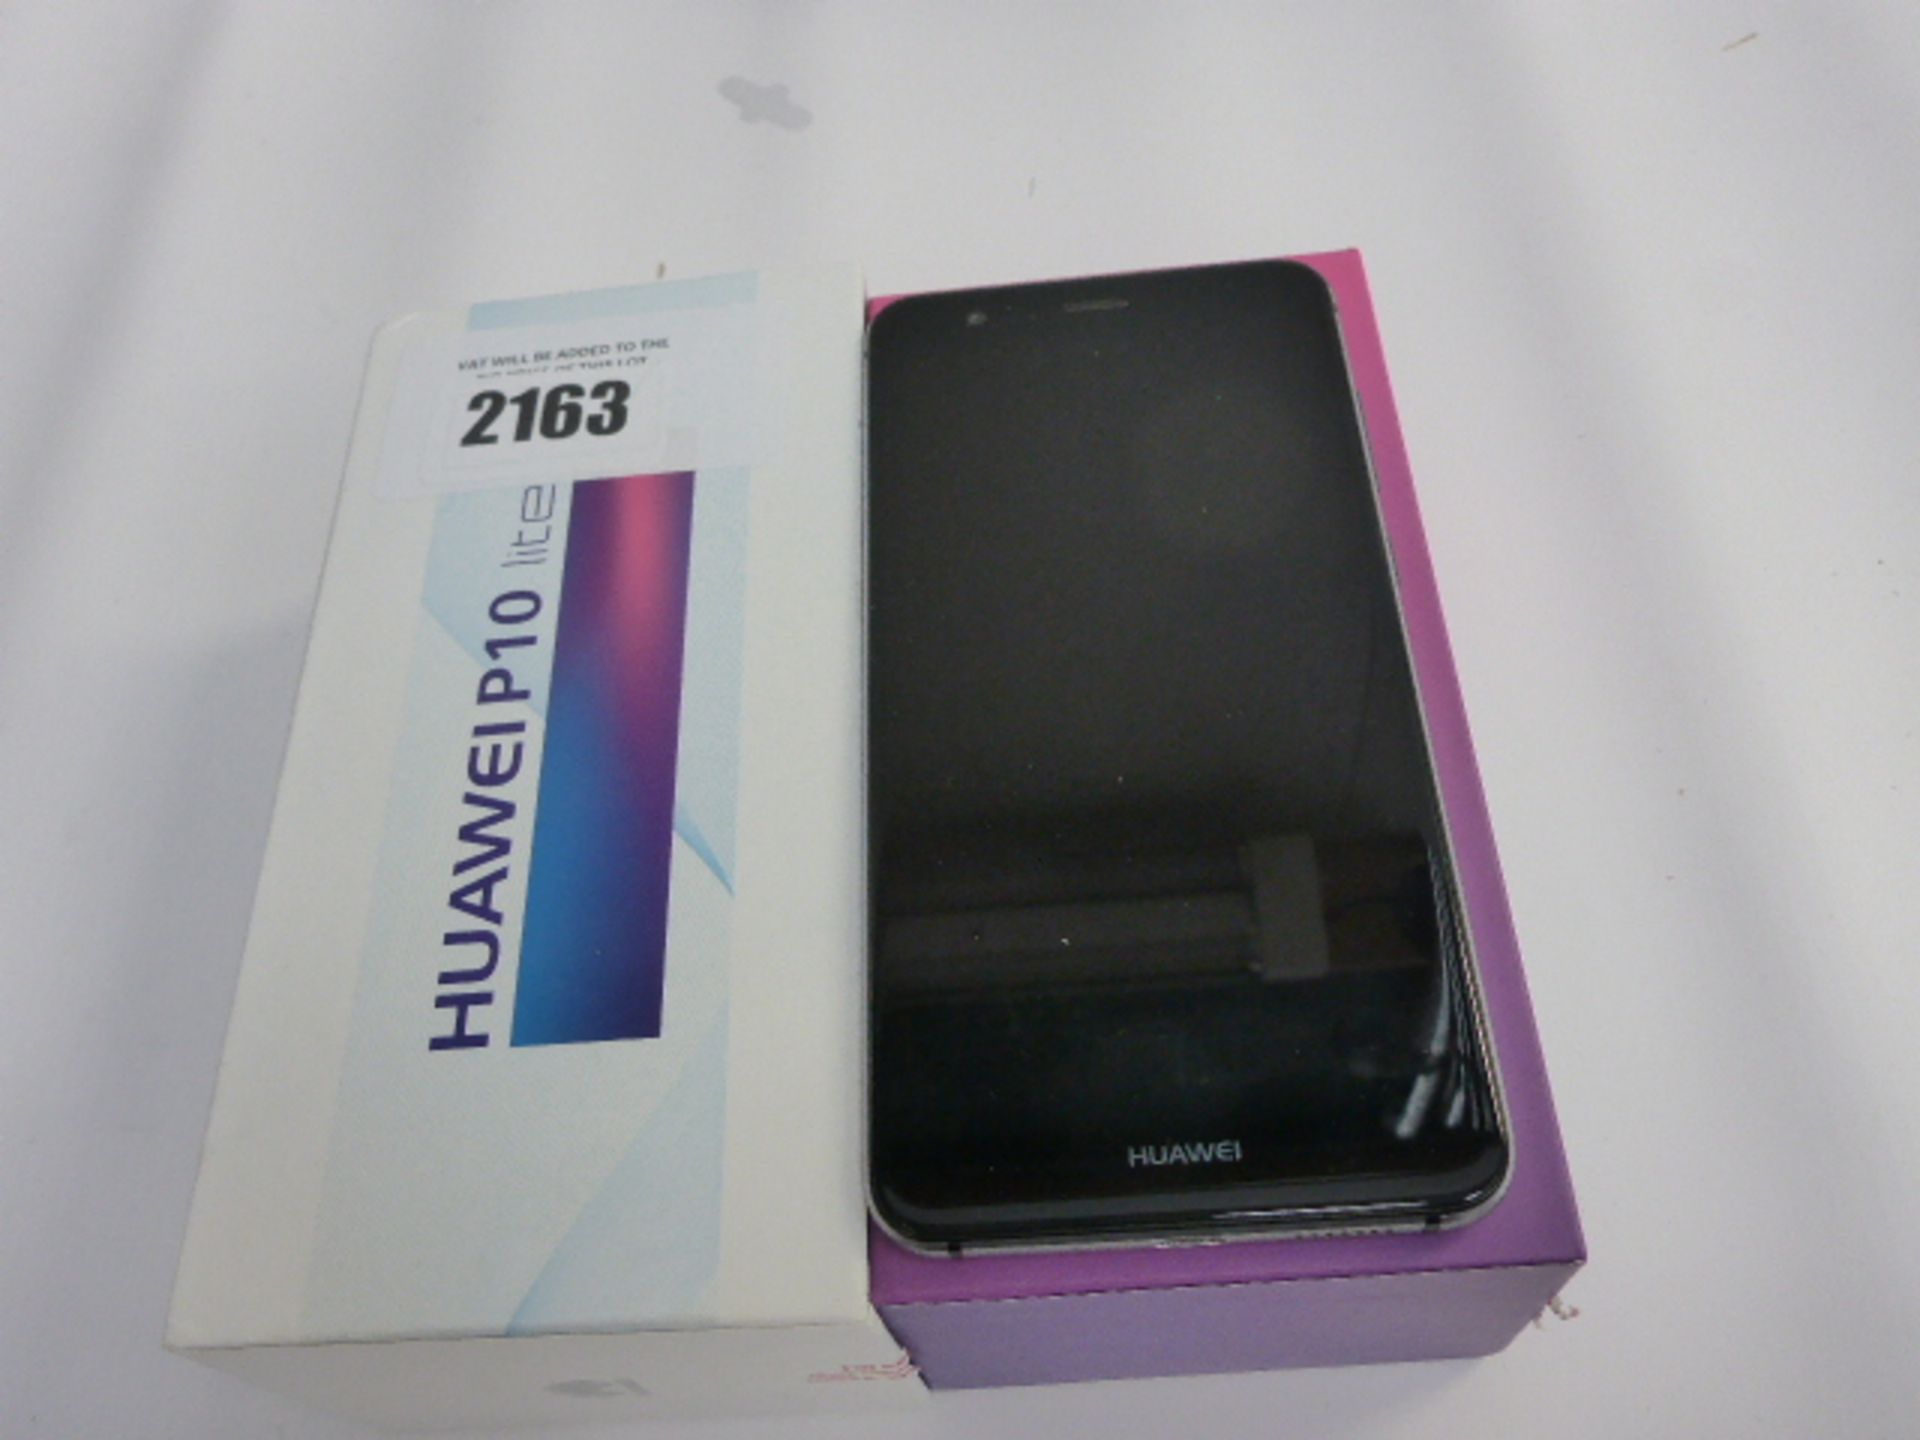 Huawei P10 Lite 32GB smartphone in box